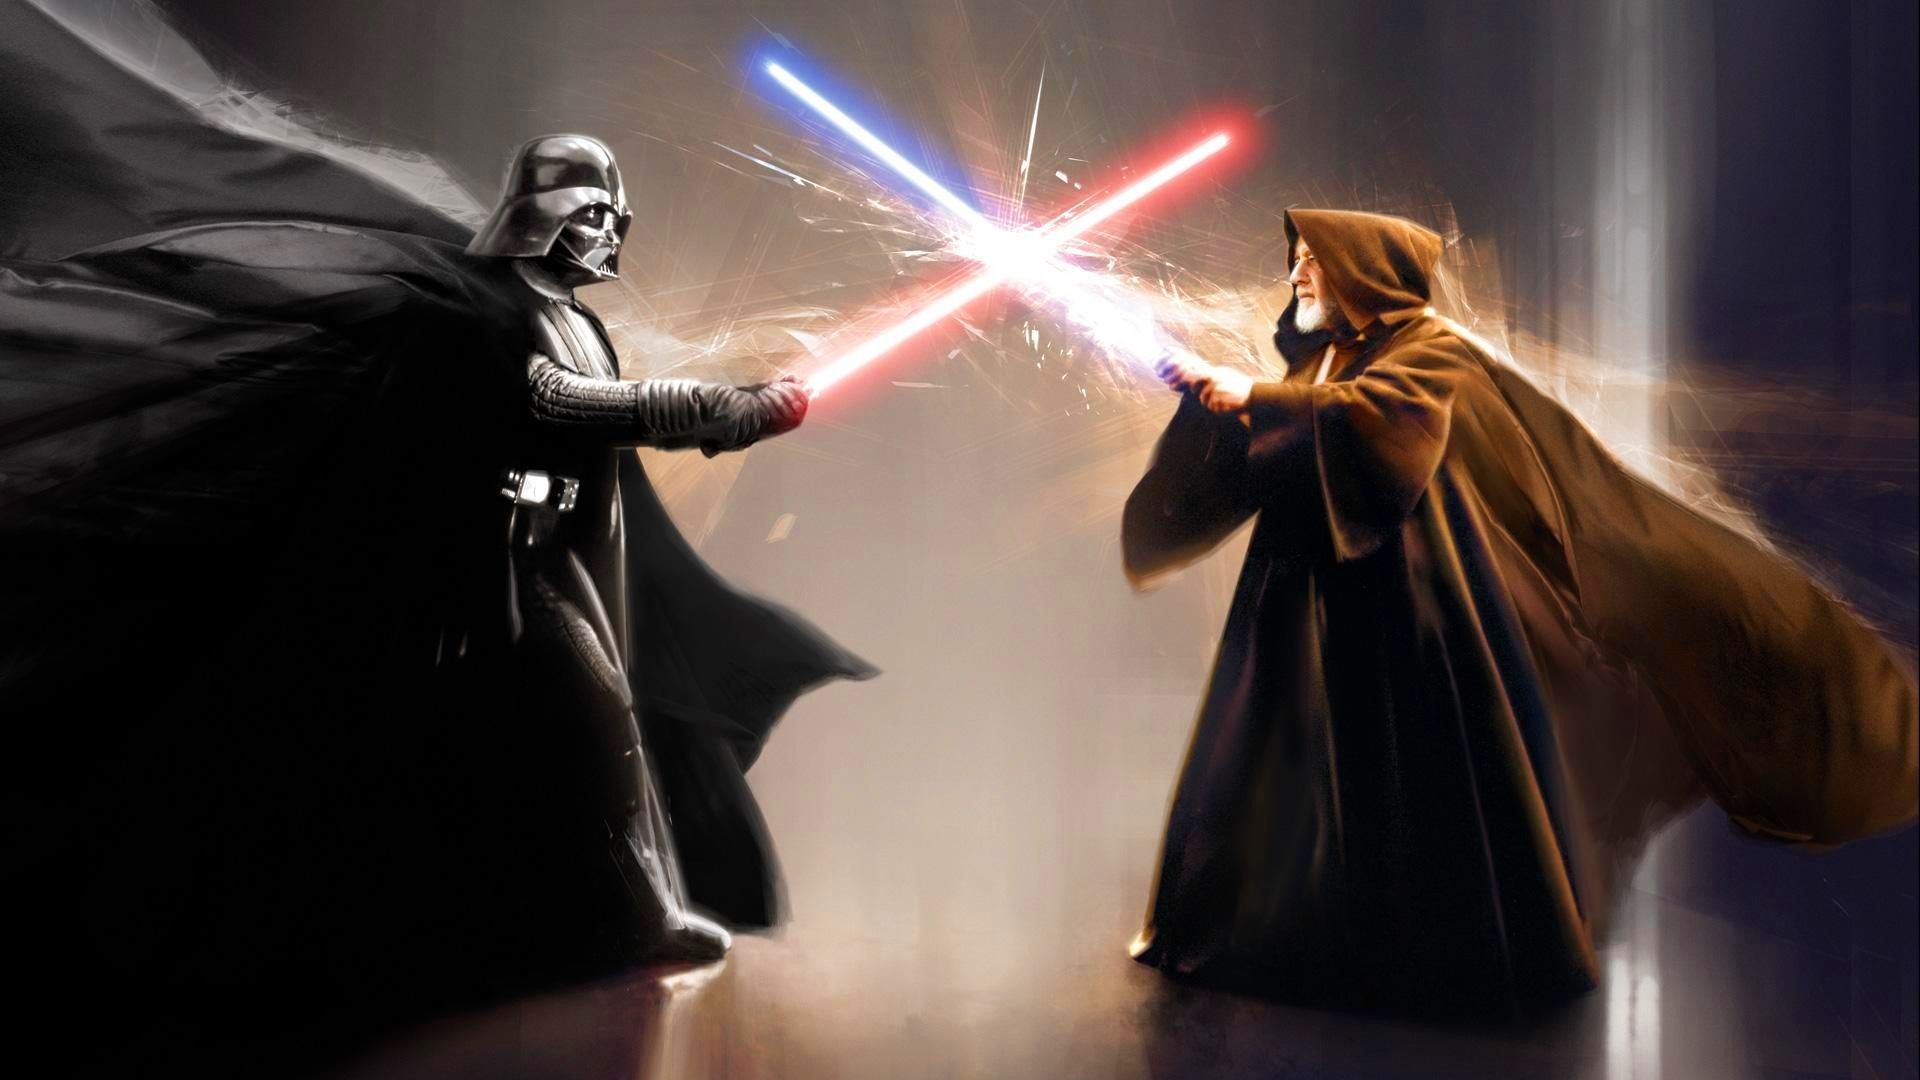 Darth Vader, Ben Kenobi vs Anakin Skywalker, Obi Wan Kenobi